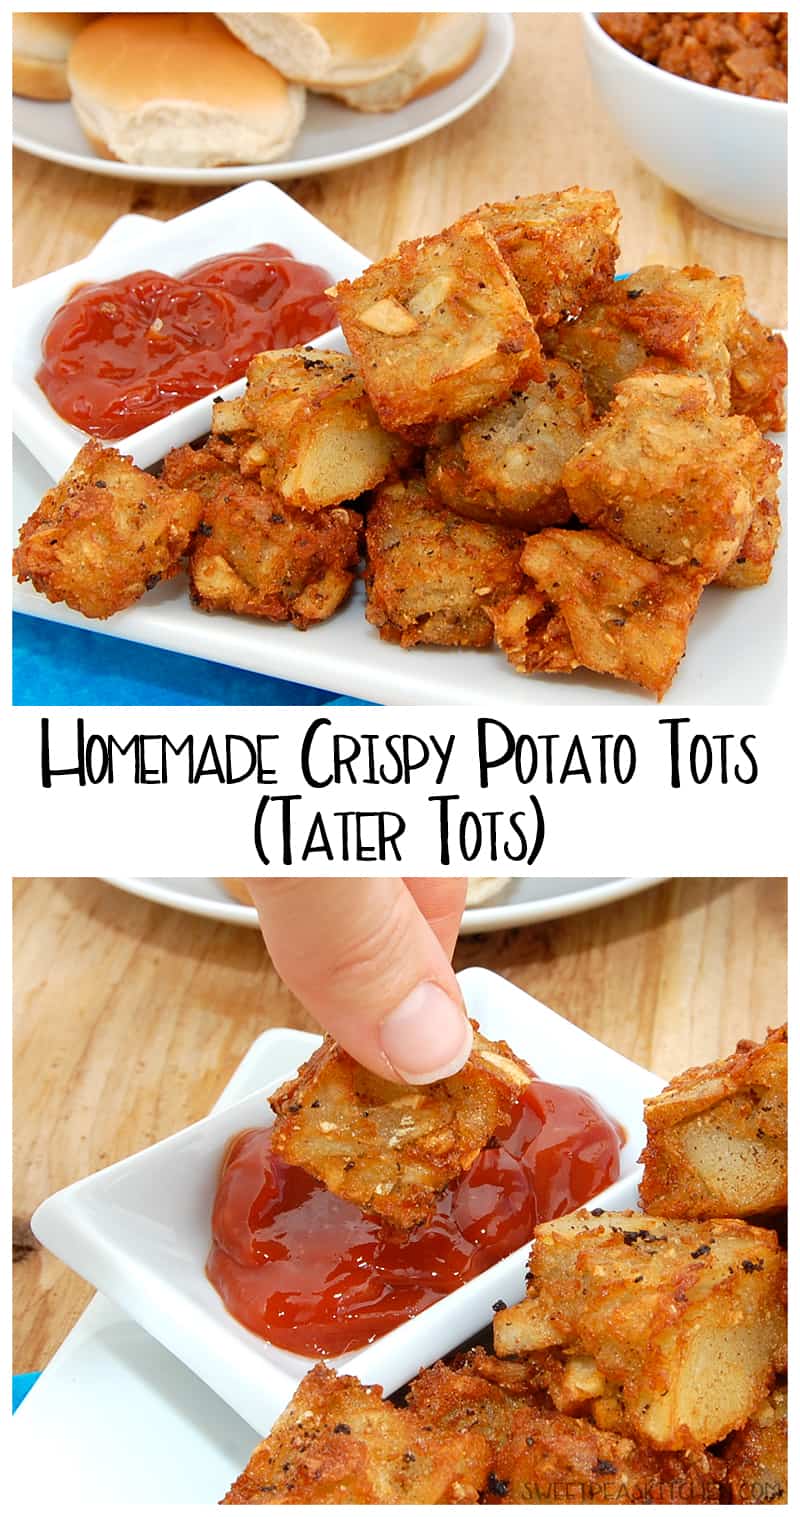 Homemade Crispy Potato Tots - PIN Image